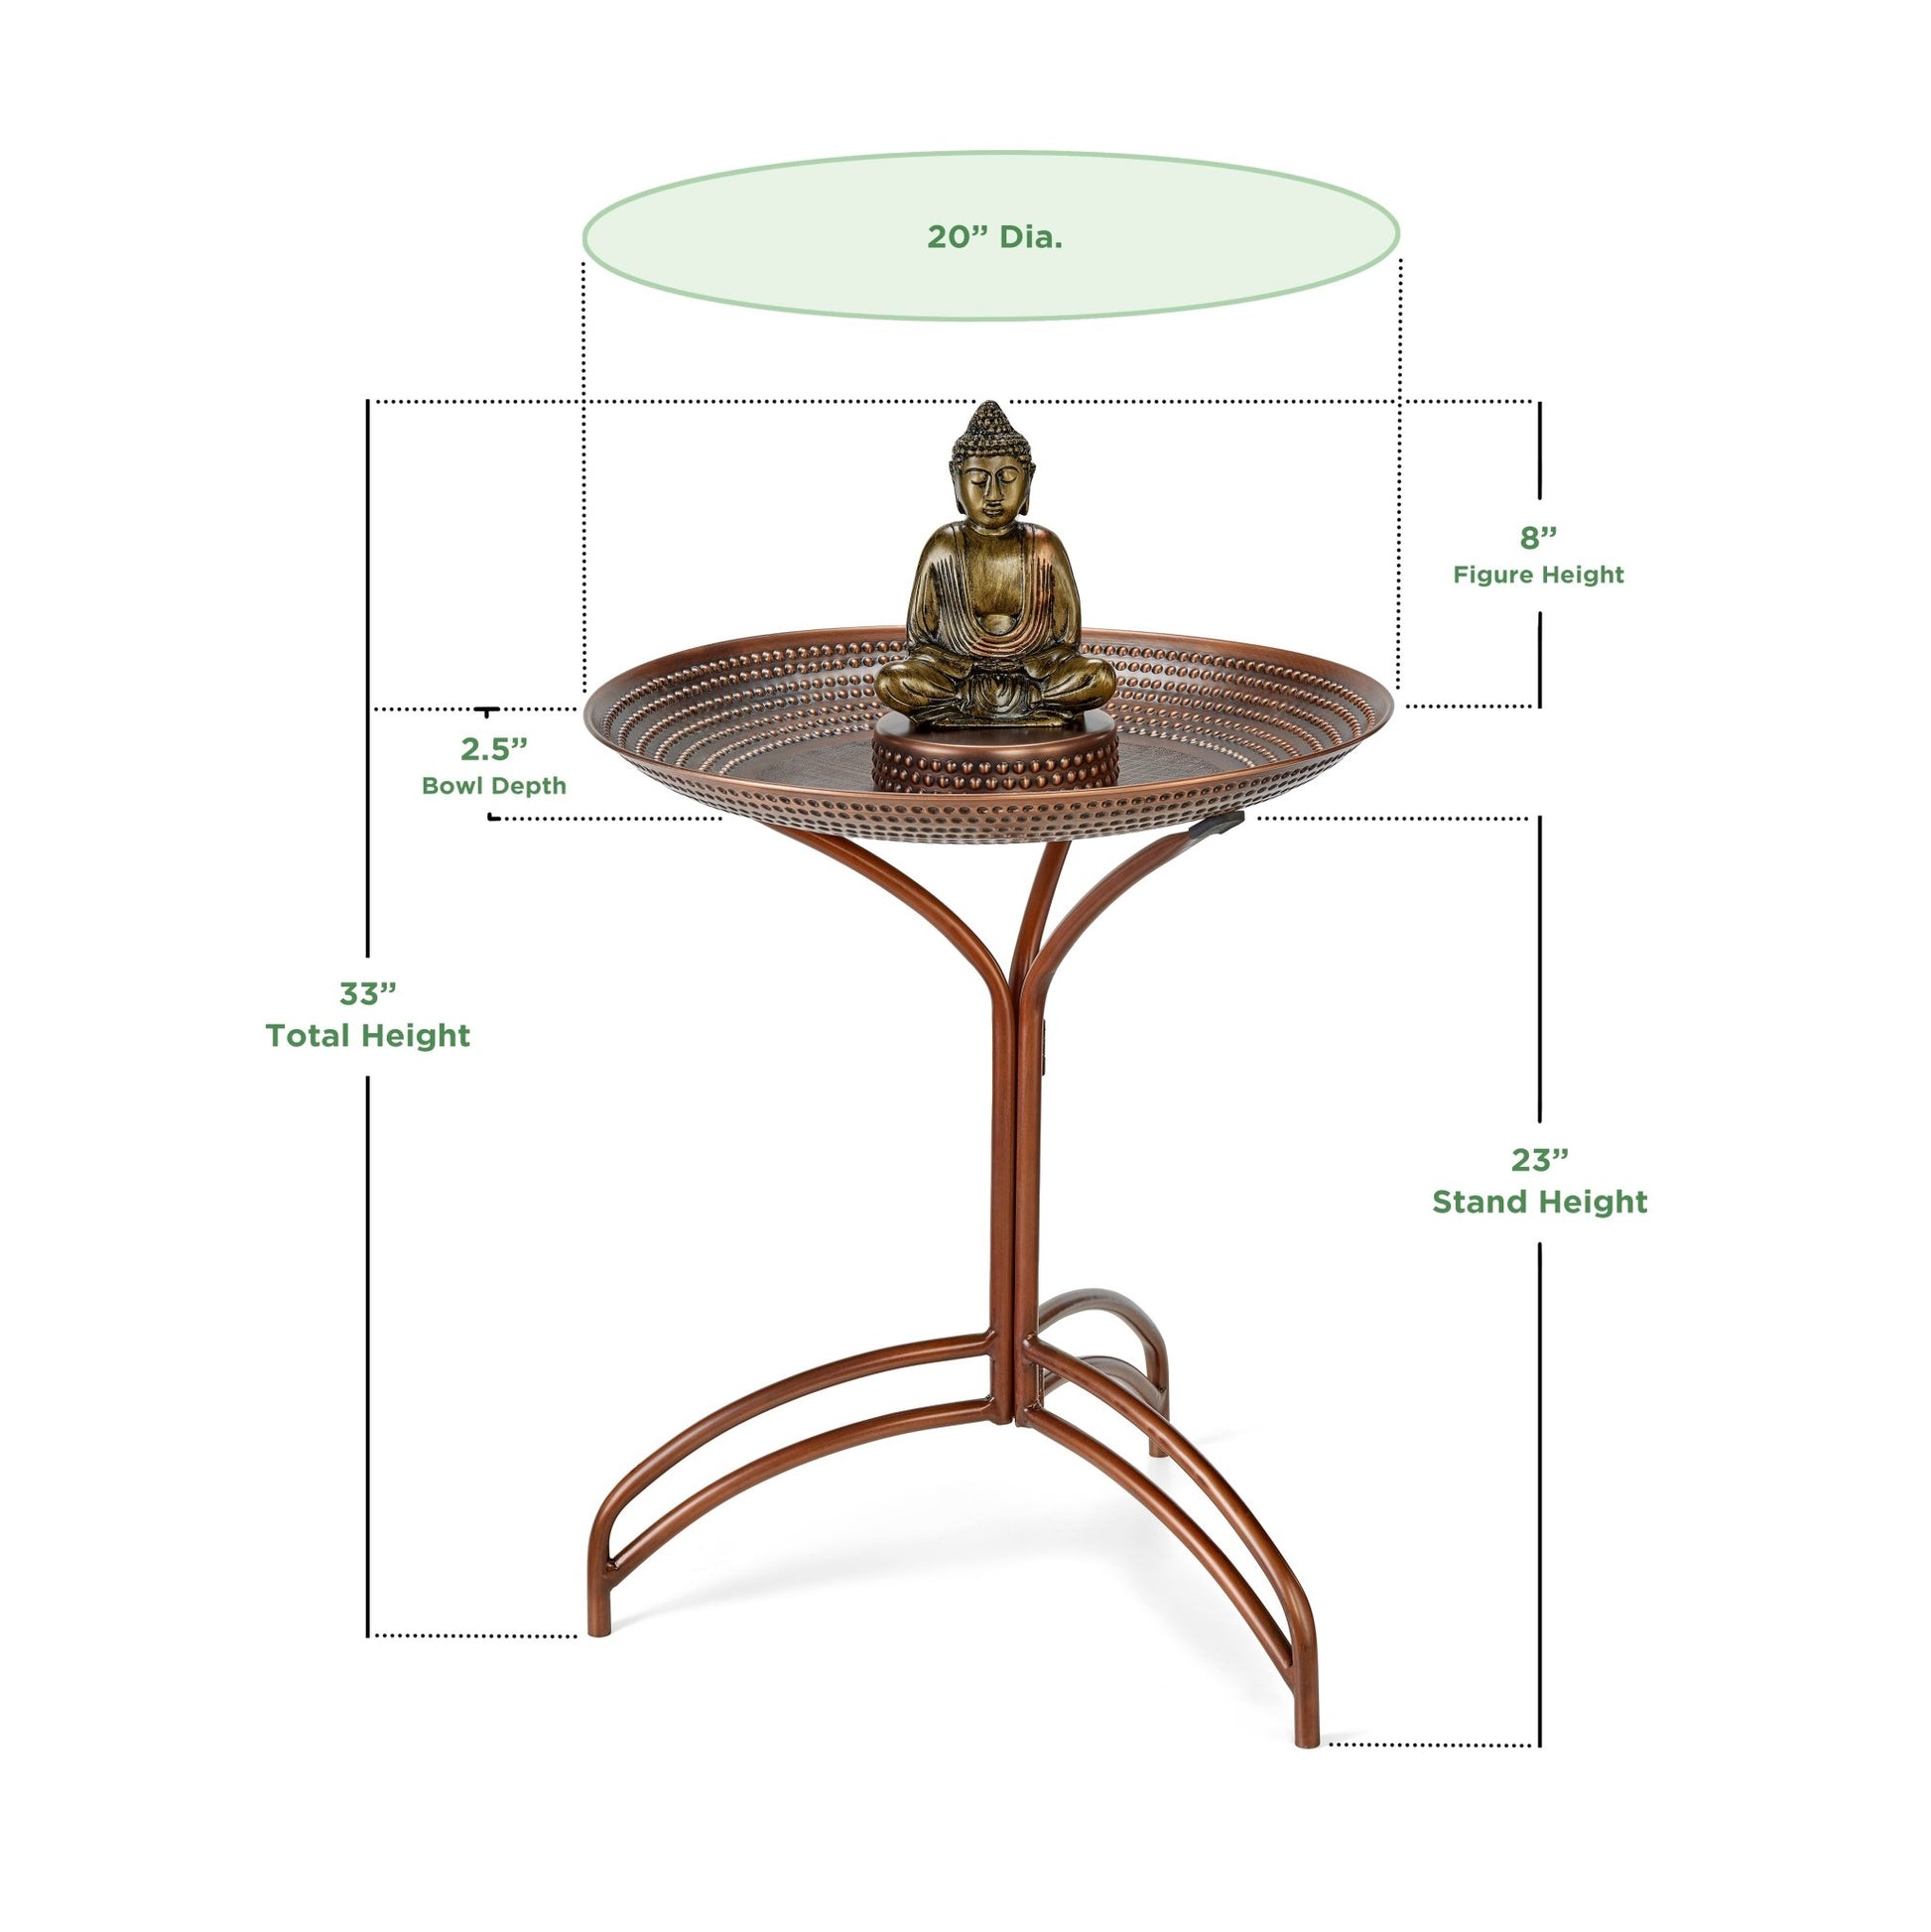 20” Copper Birdbath with Meditating Buddha on Pedestal - Good Directions